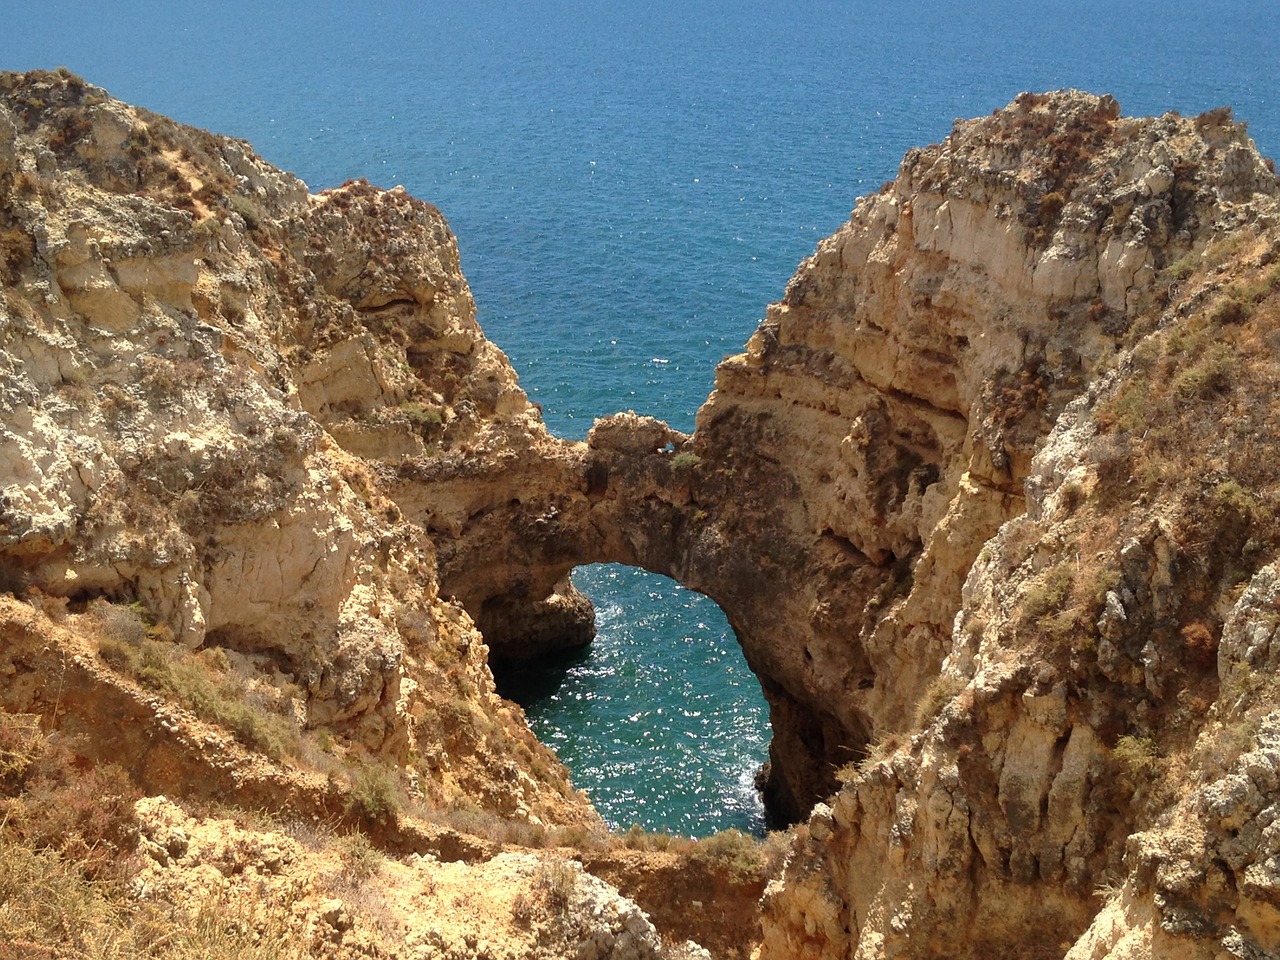 https://pixabay.com/en/algarve-portugal-rocky-coast-nature-1292579/